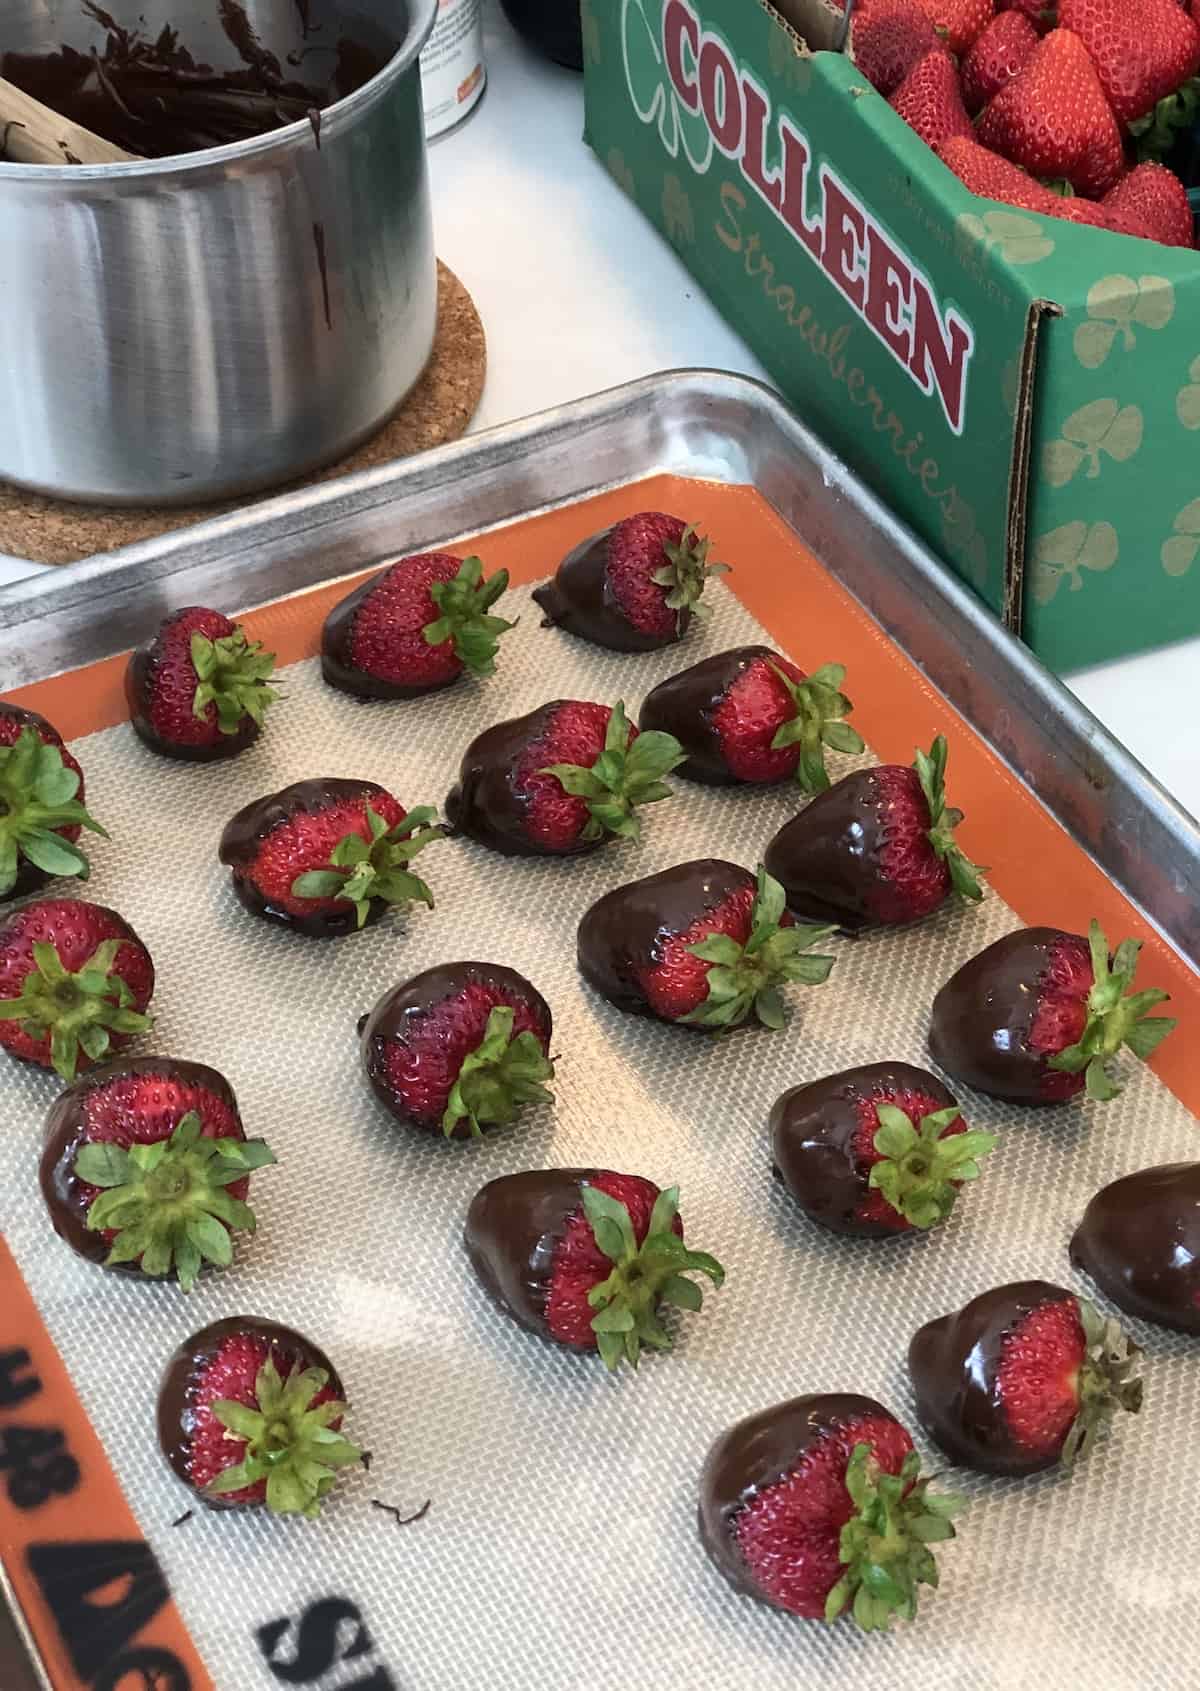 Dipping fresh strawberries in chocolate in june